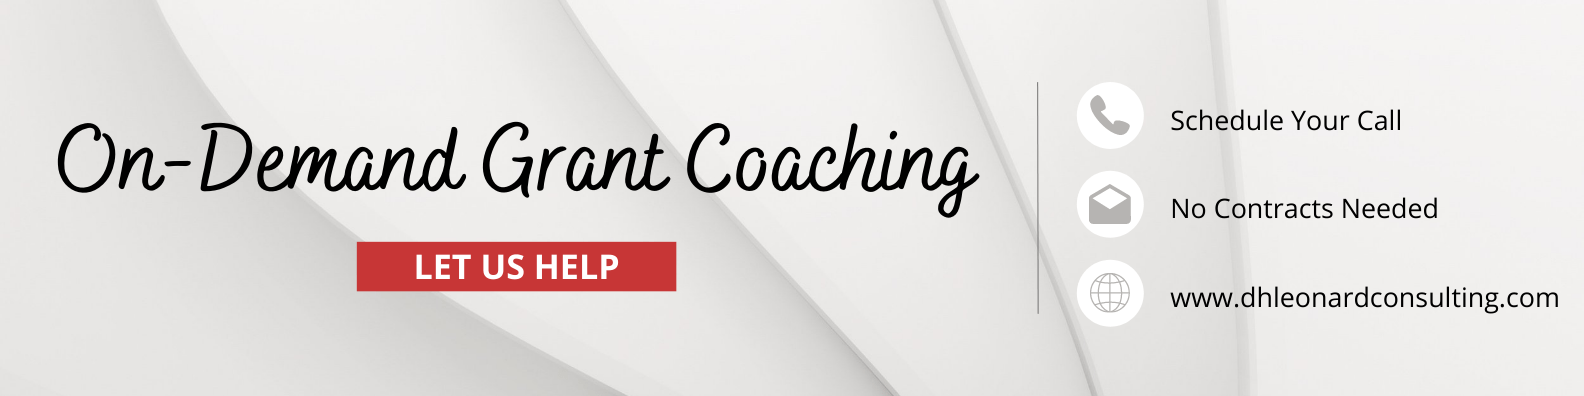 On Demand Grant Coaching